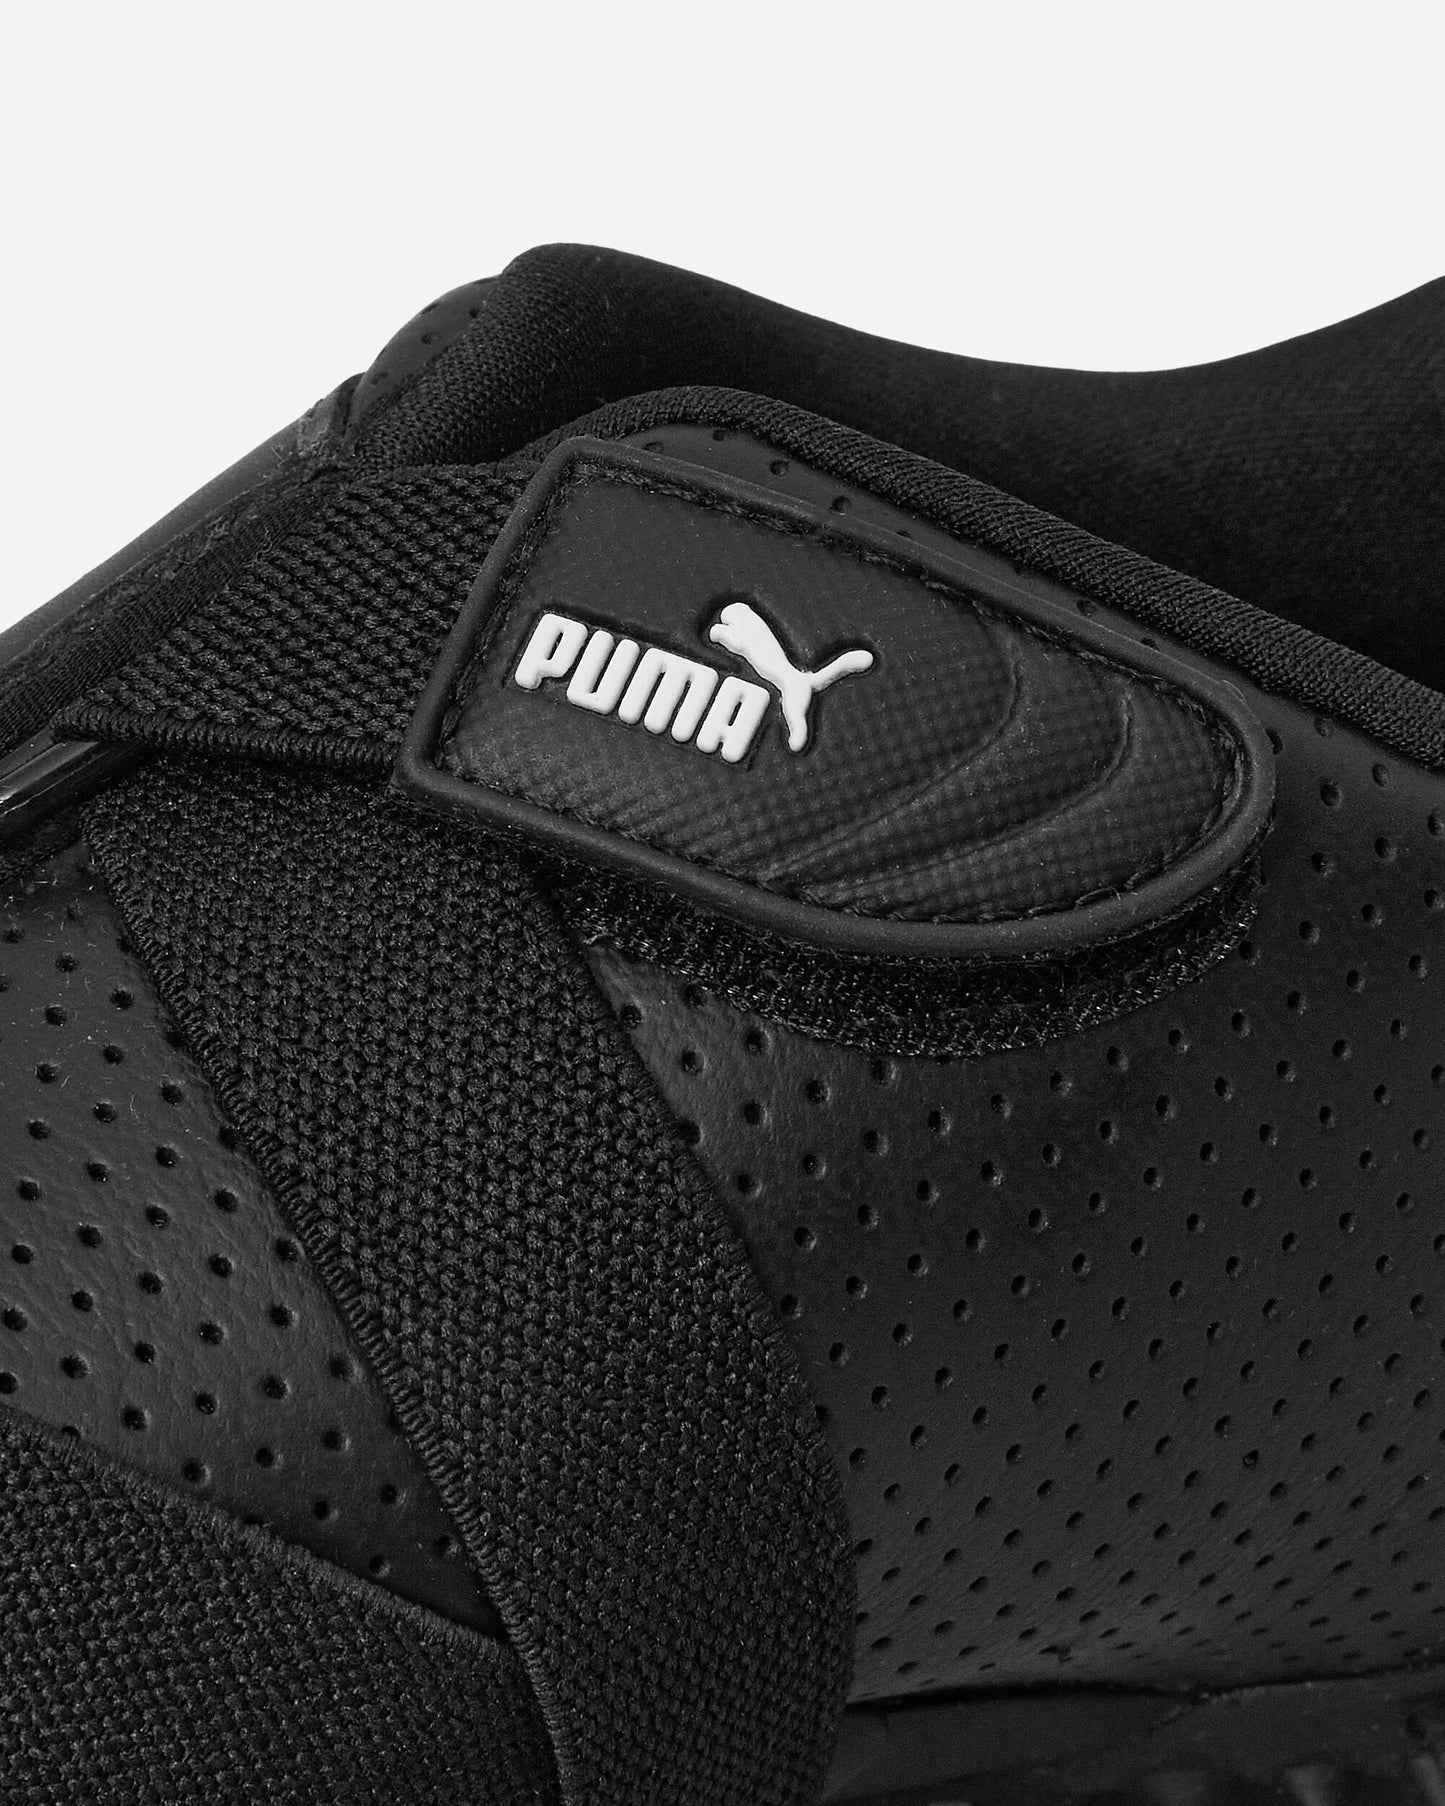 Puma Mostro Perf Puma Black/Puma White Sneakers Low 397331-02